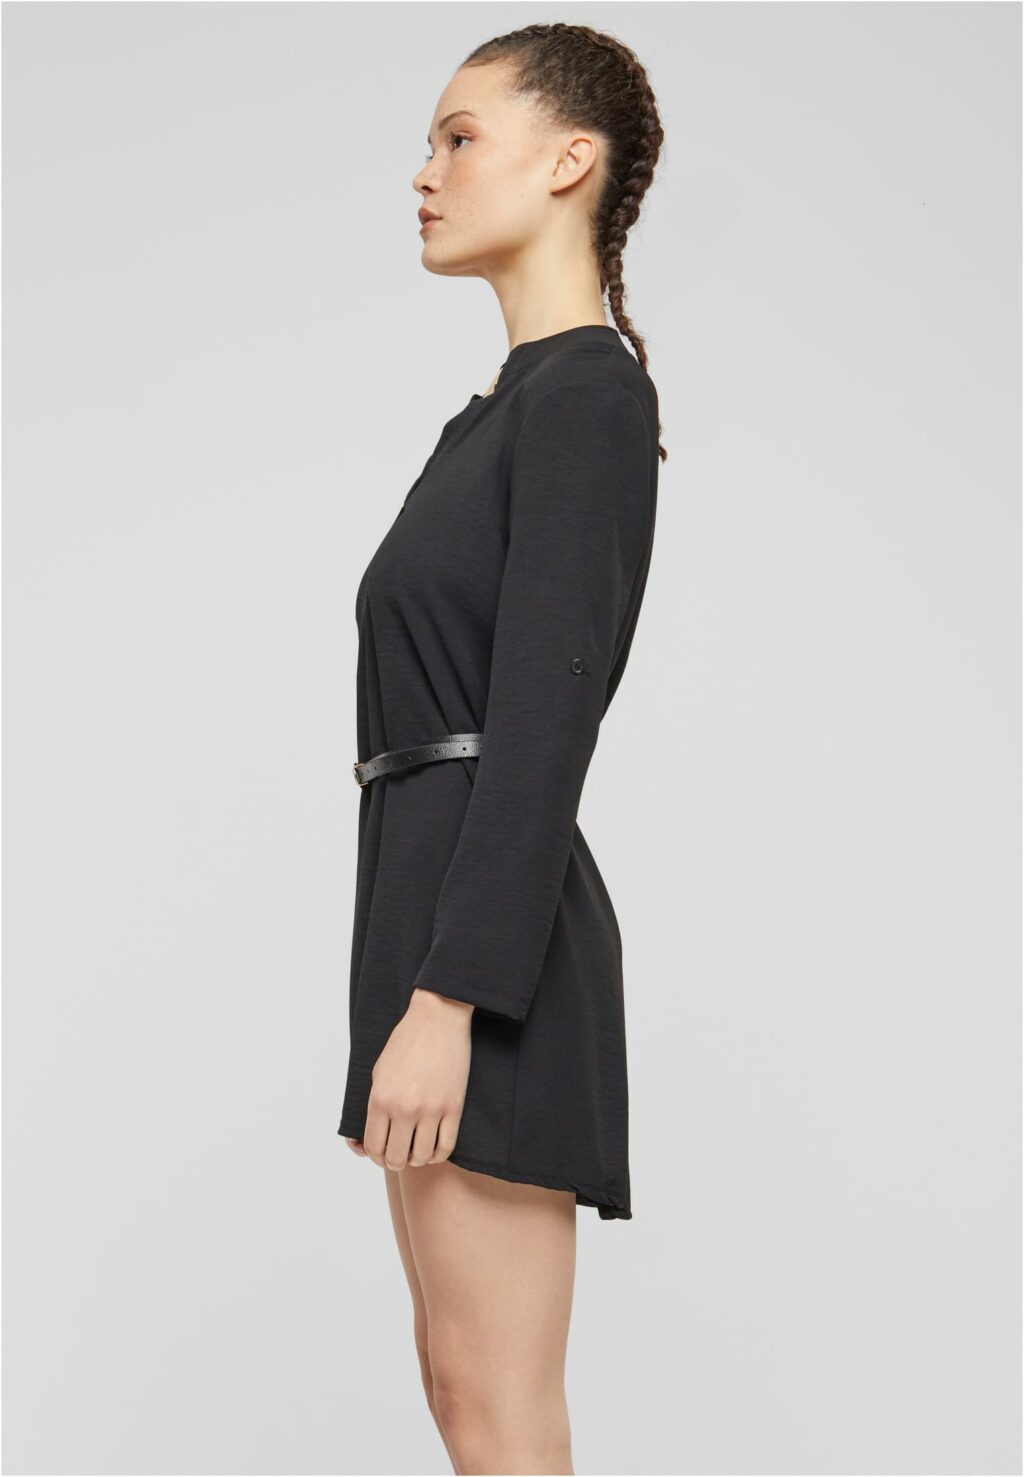 Cloud5ive Damen Longform Musselin Turn-Up Shirt mit Gürtel black 5126CL5